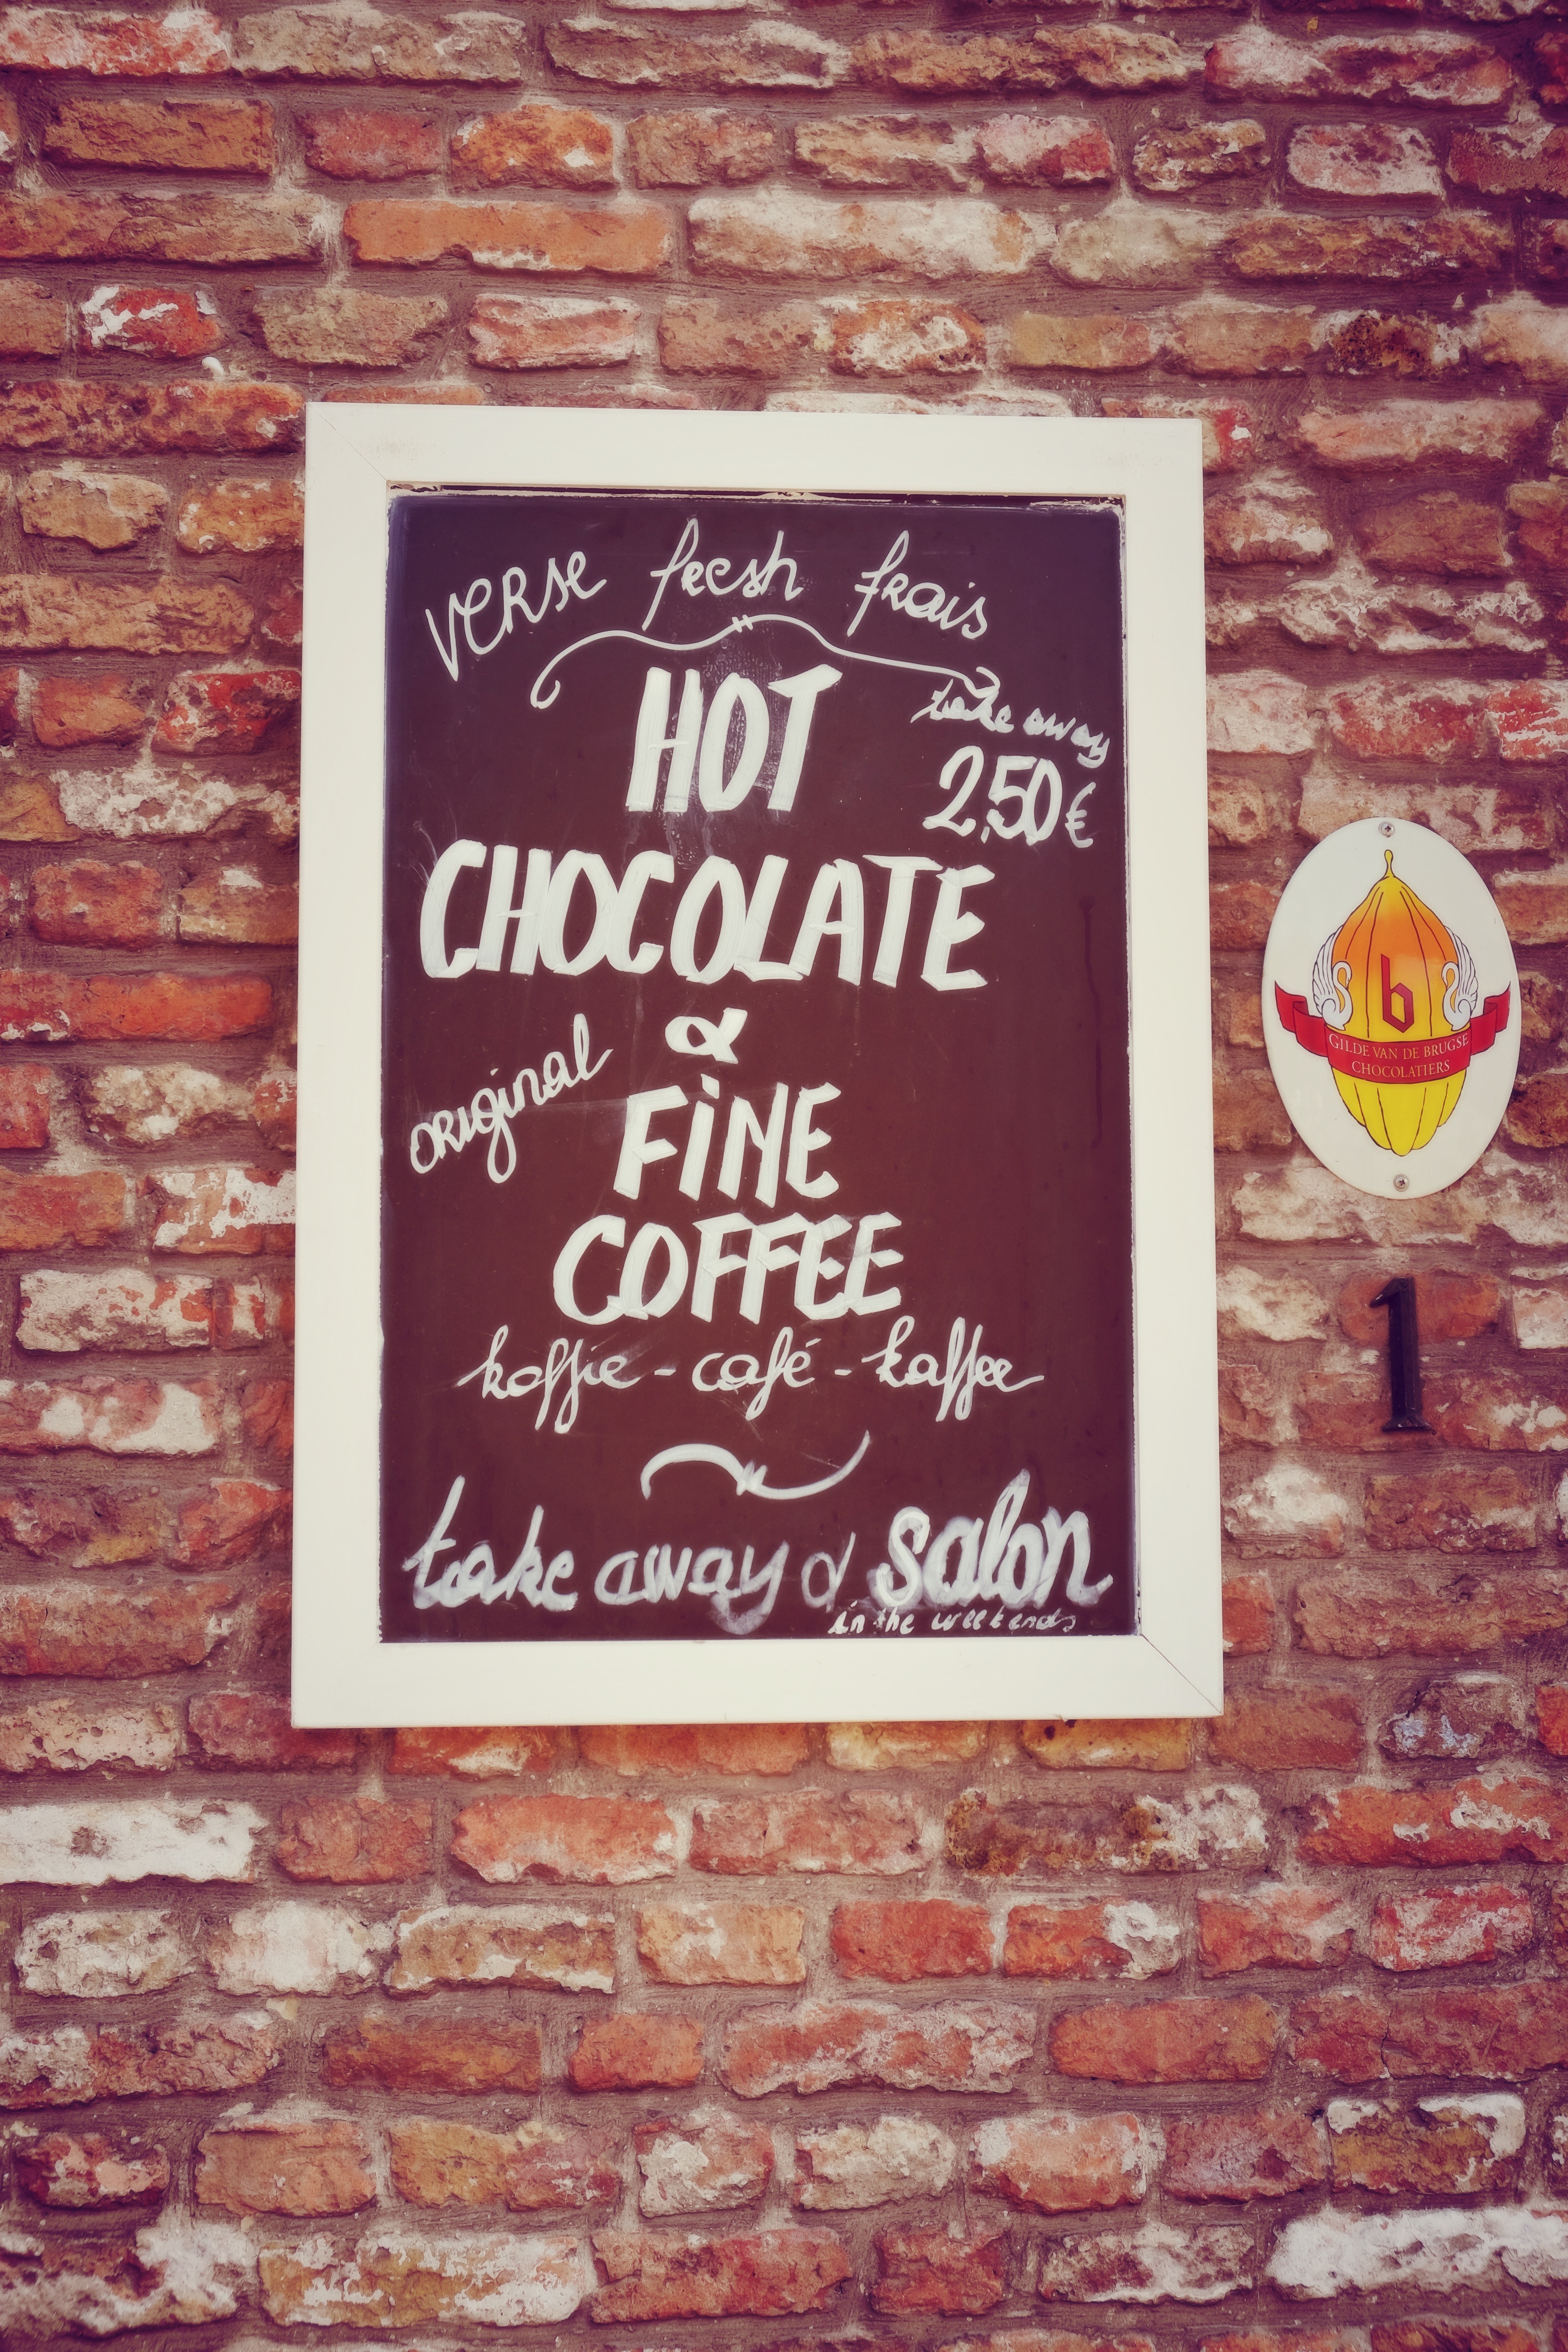 Menu, Signage, Coffee, Chocolate, Sign, text, brick wall